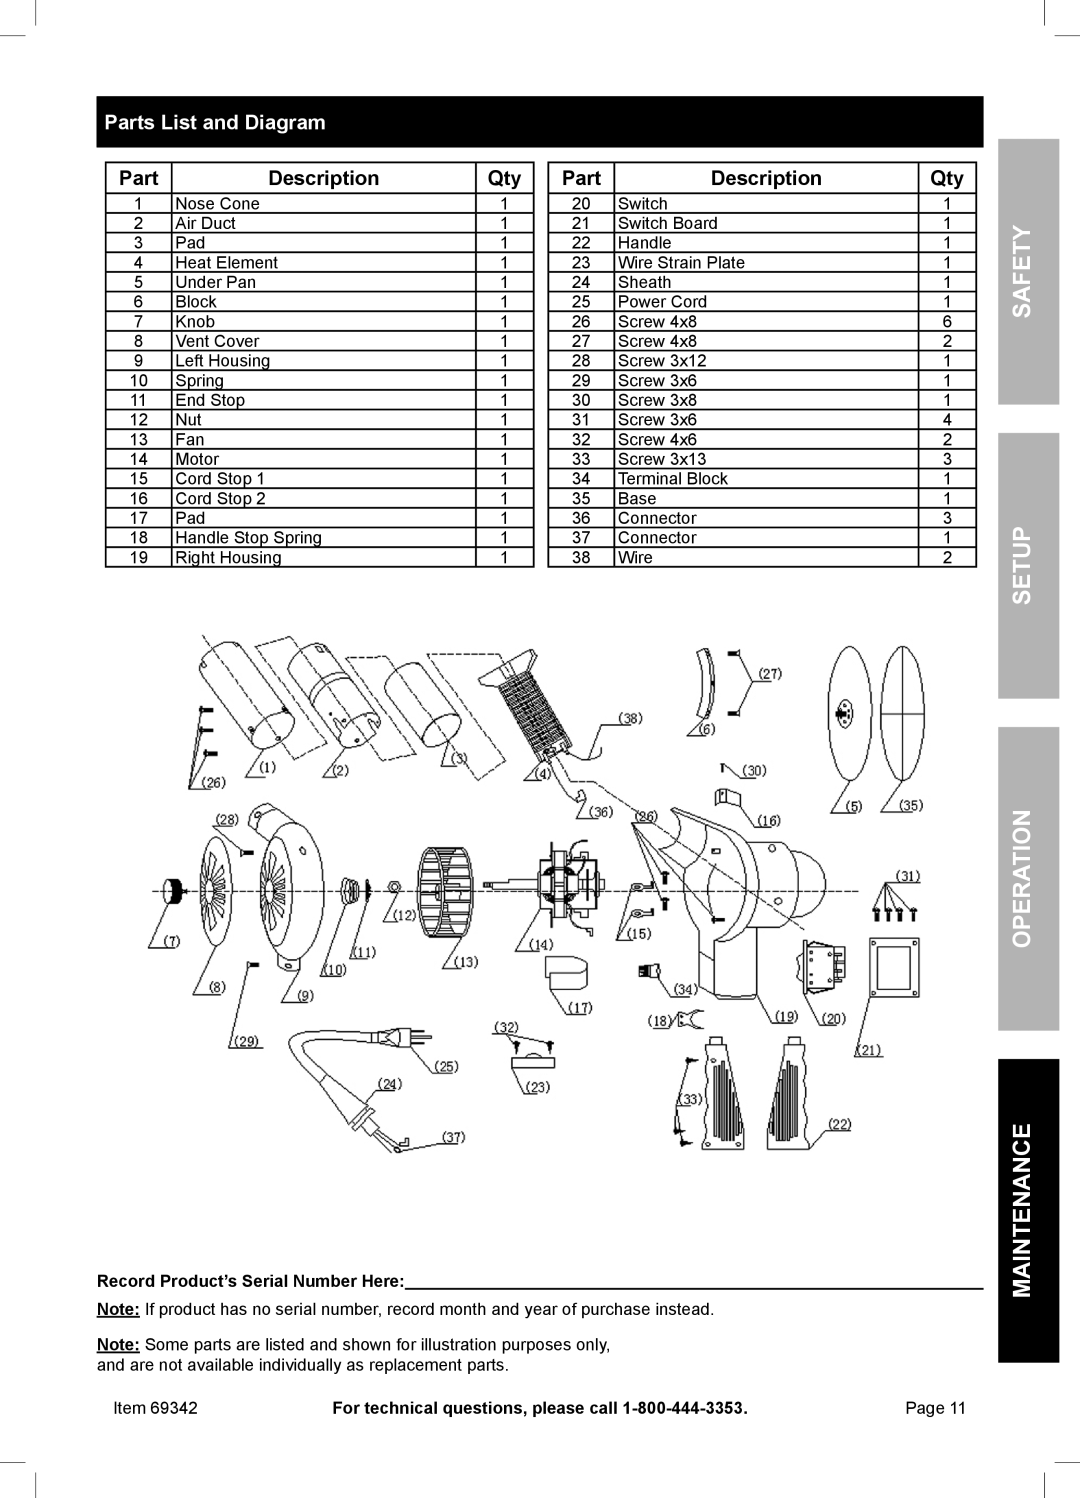 Harbor Freight Tools 69342 owner manual Parts List and Diagram, Part Description Qty 